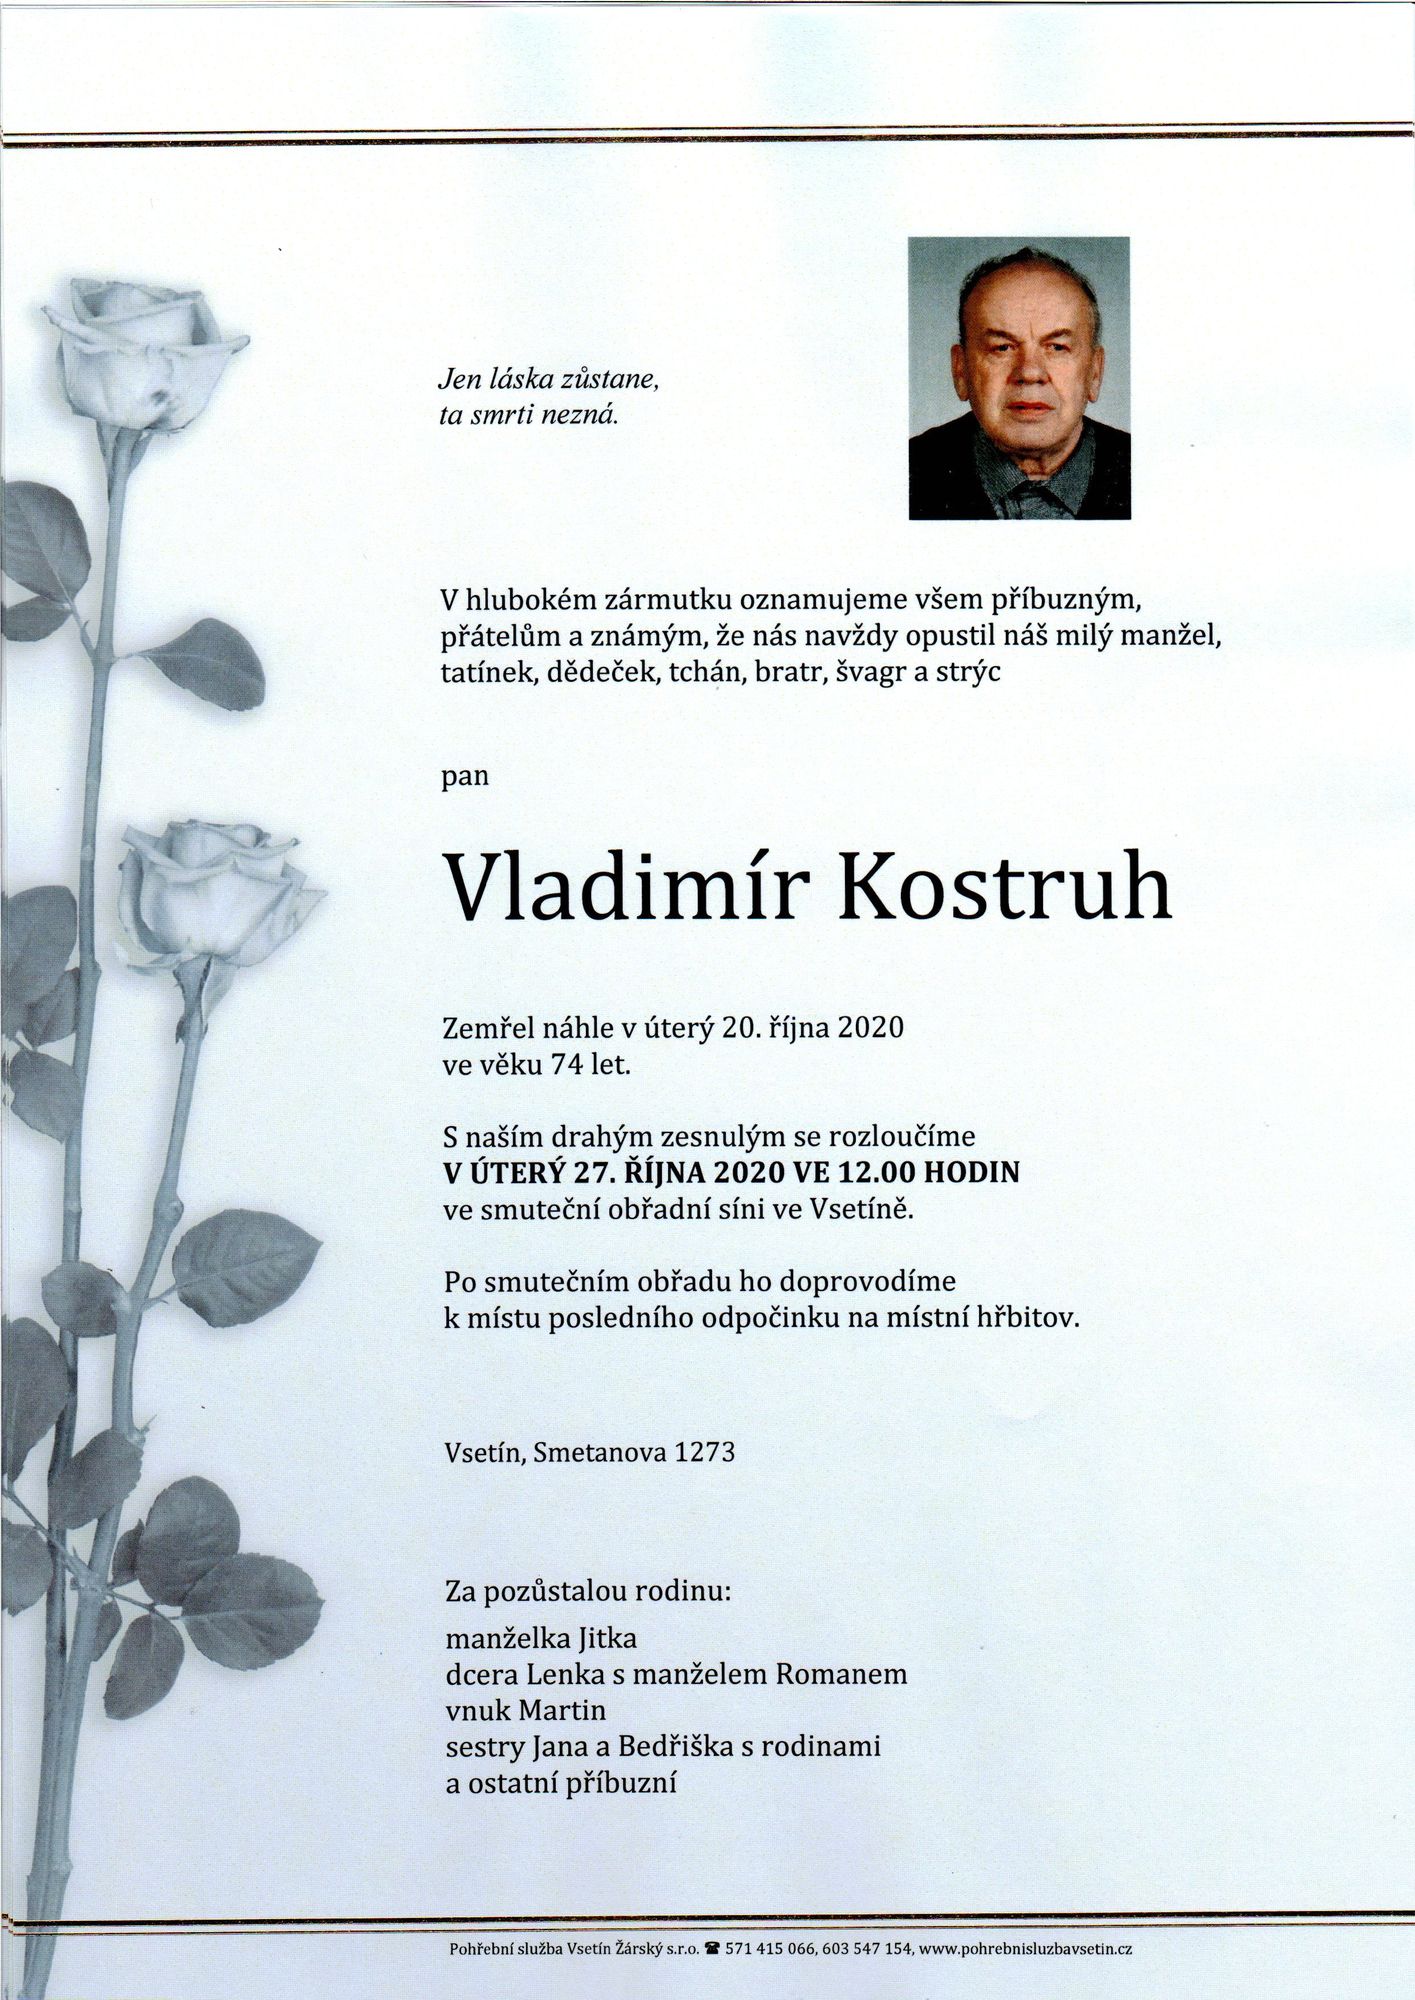 Vladimír Kostruh